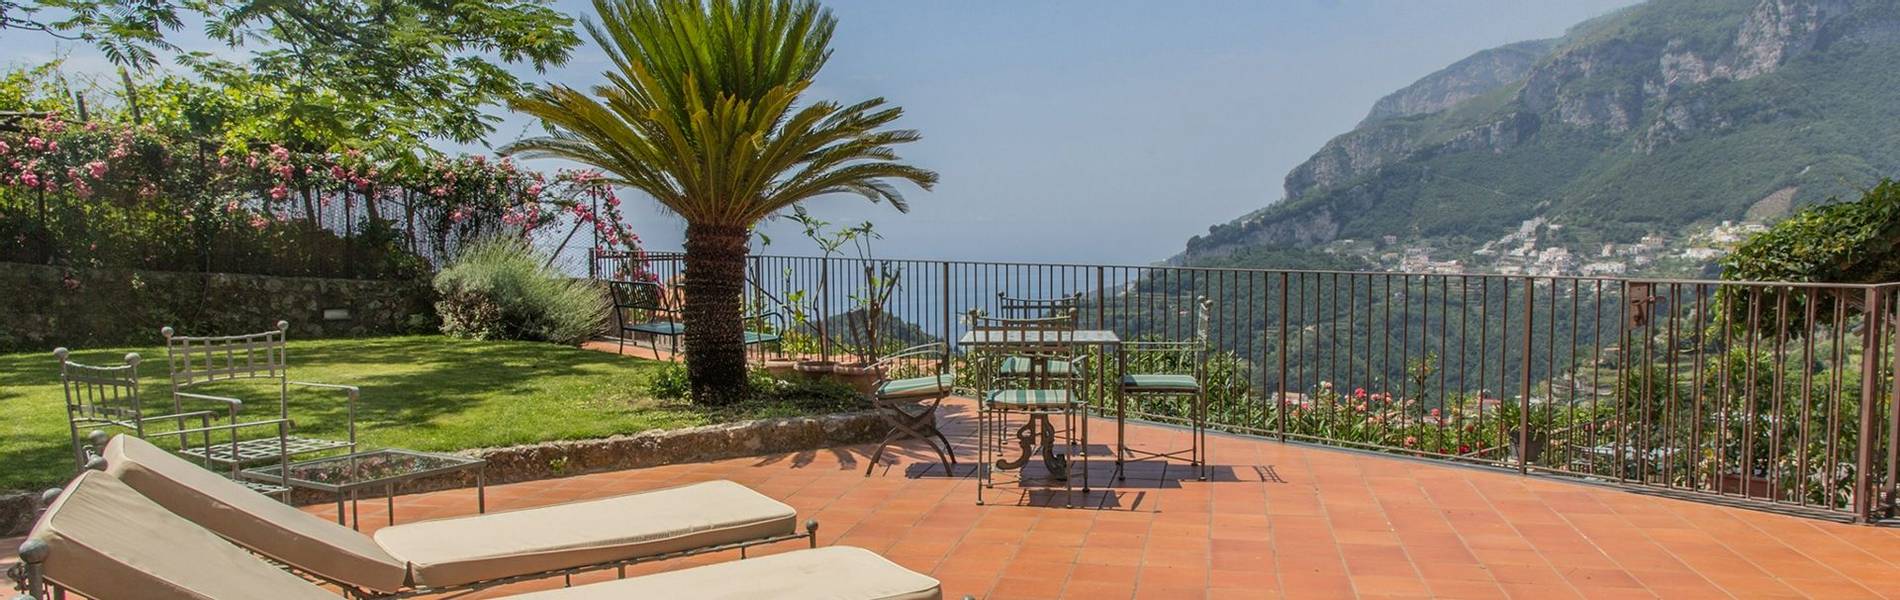 Villa Maria, Amalfi Coast, Italy, Solarium.jpg